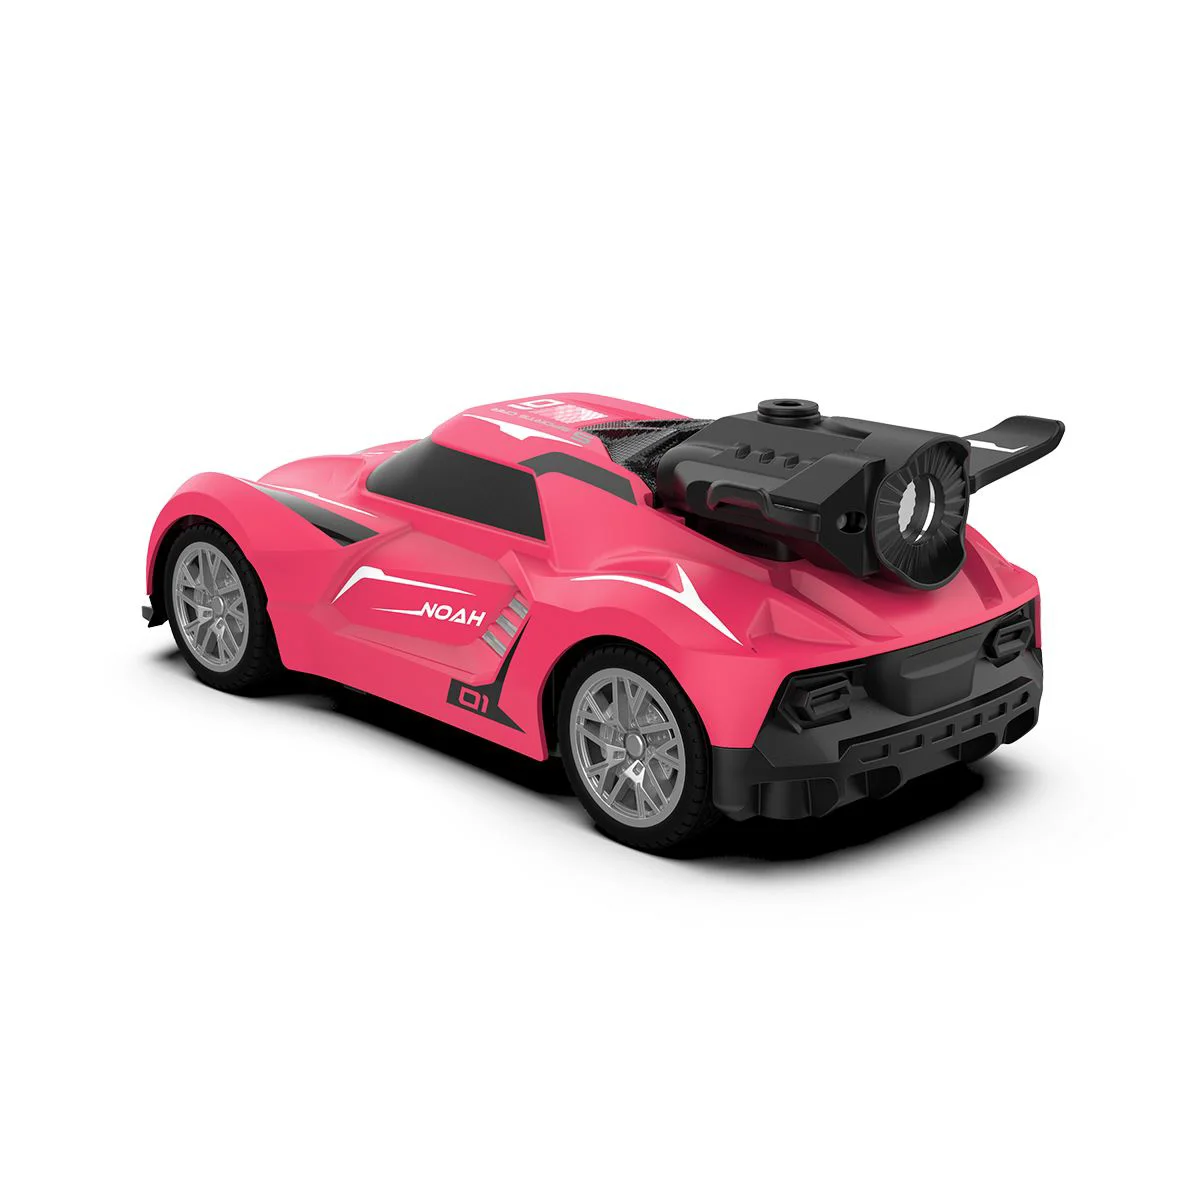 Masina cu telecomanda Spray Car-Sport Roz 1:24, cu efecte luminoase si de fum